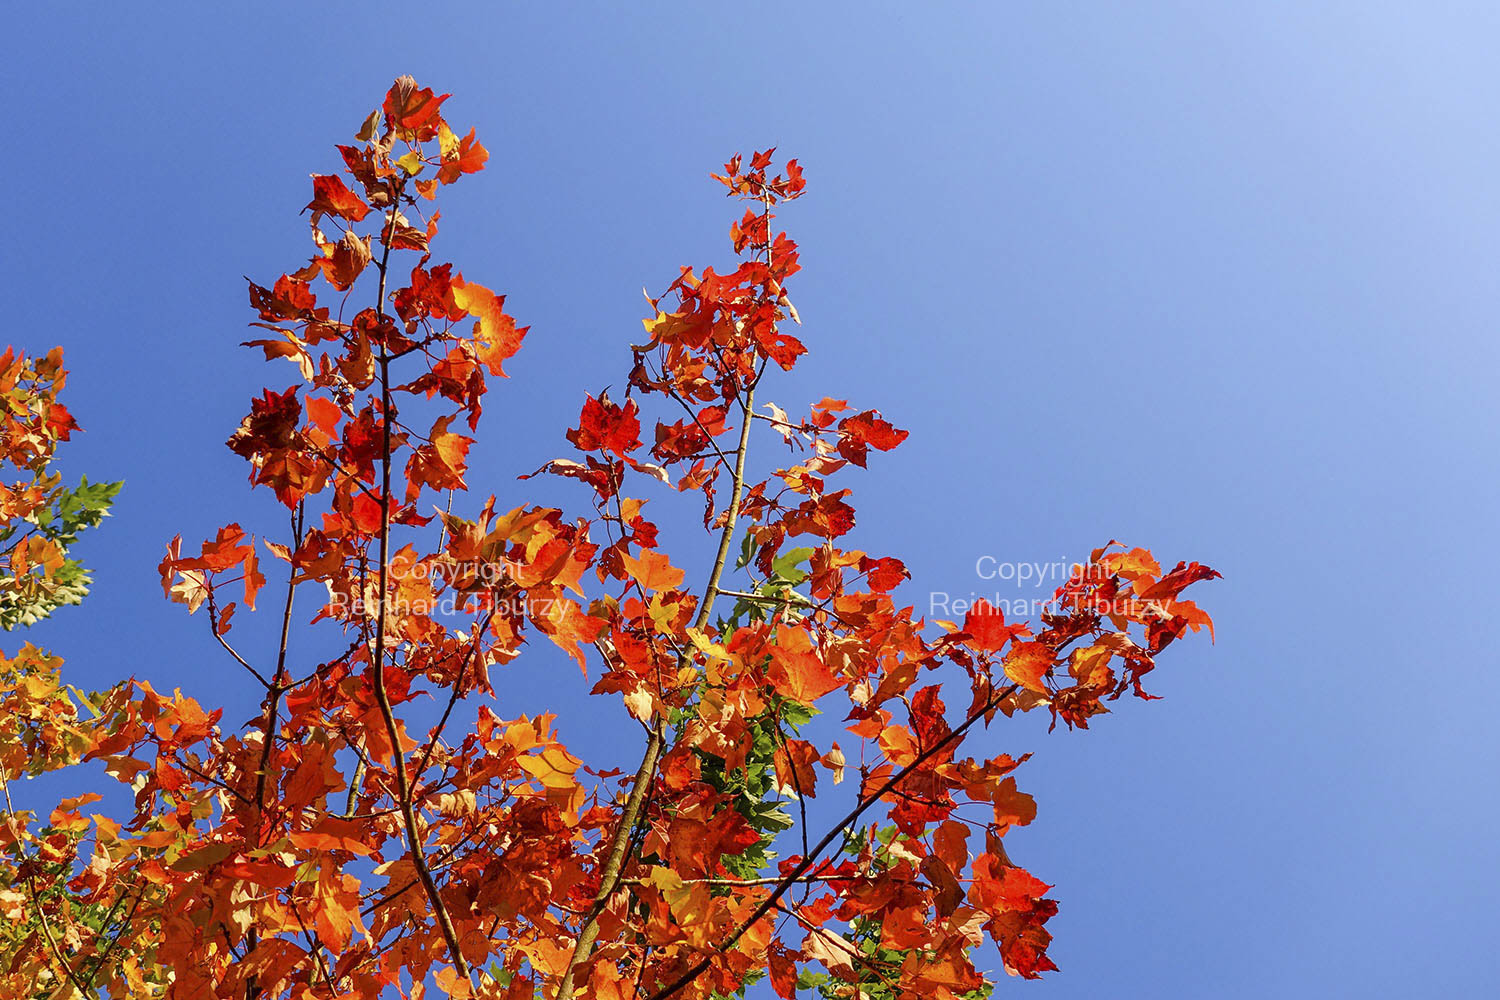 autumn_foliage_maple_tree